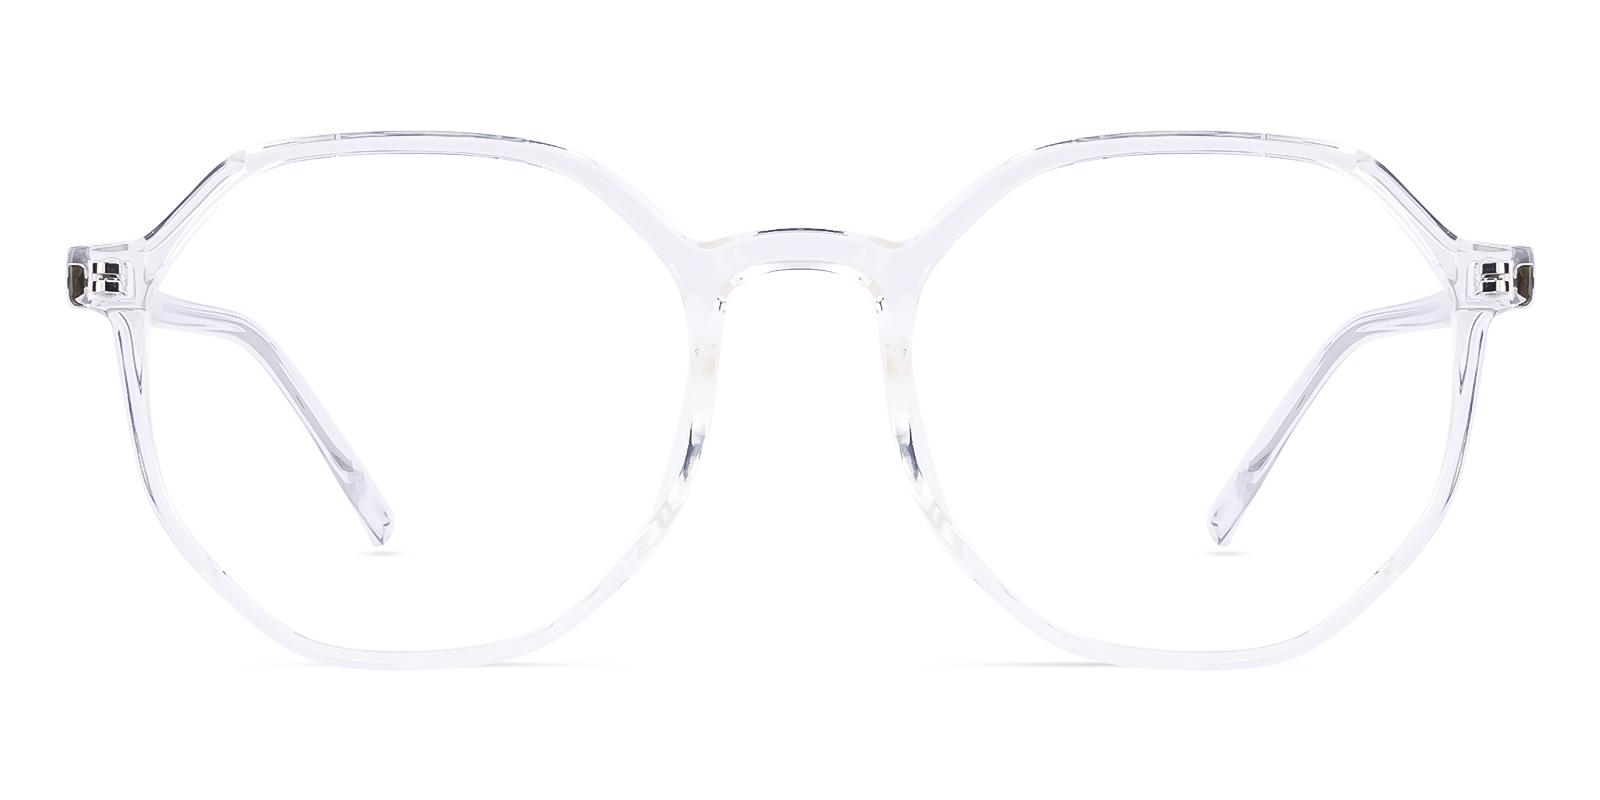 Nasccoach Fclear Plastic Eyeglasses , UniversalBridgeFit Frames from ABBE Glasses